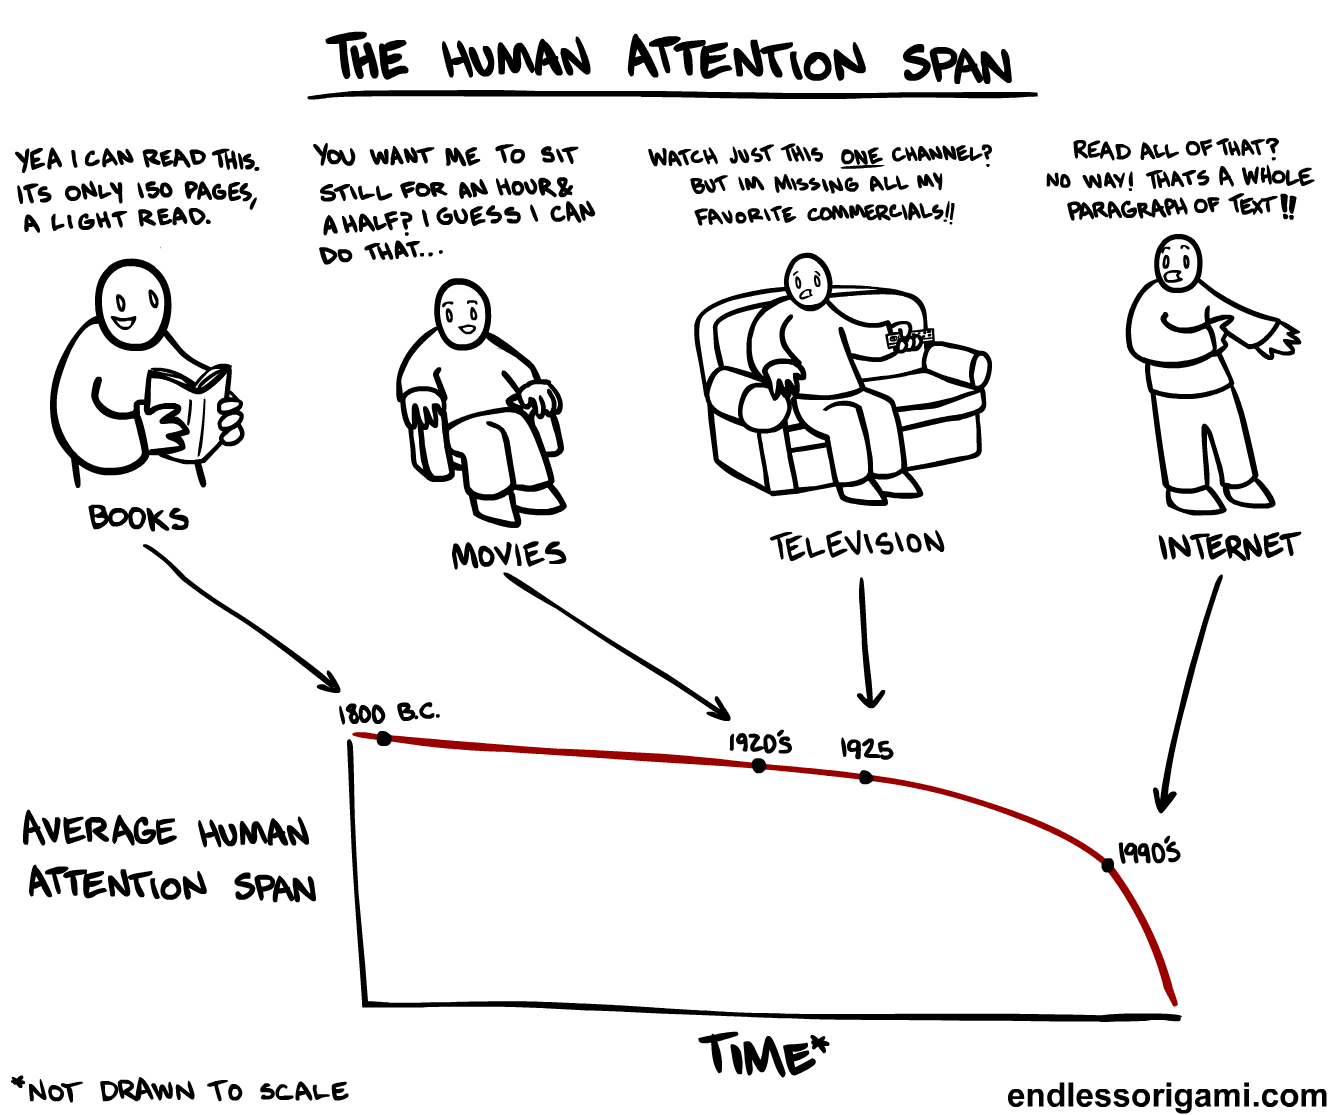 Attention span. Span перевод. Attention span перевод. The average Human attention span. Spin перевод.